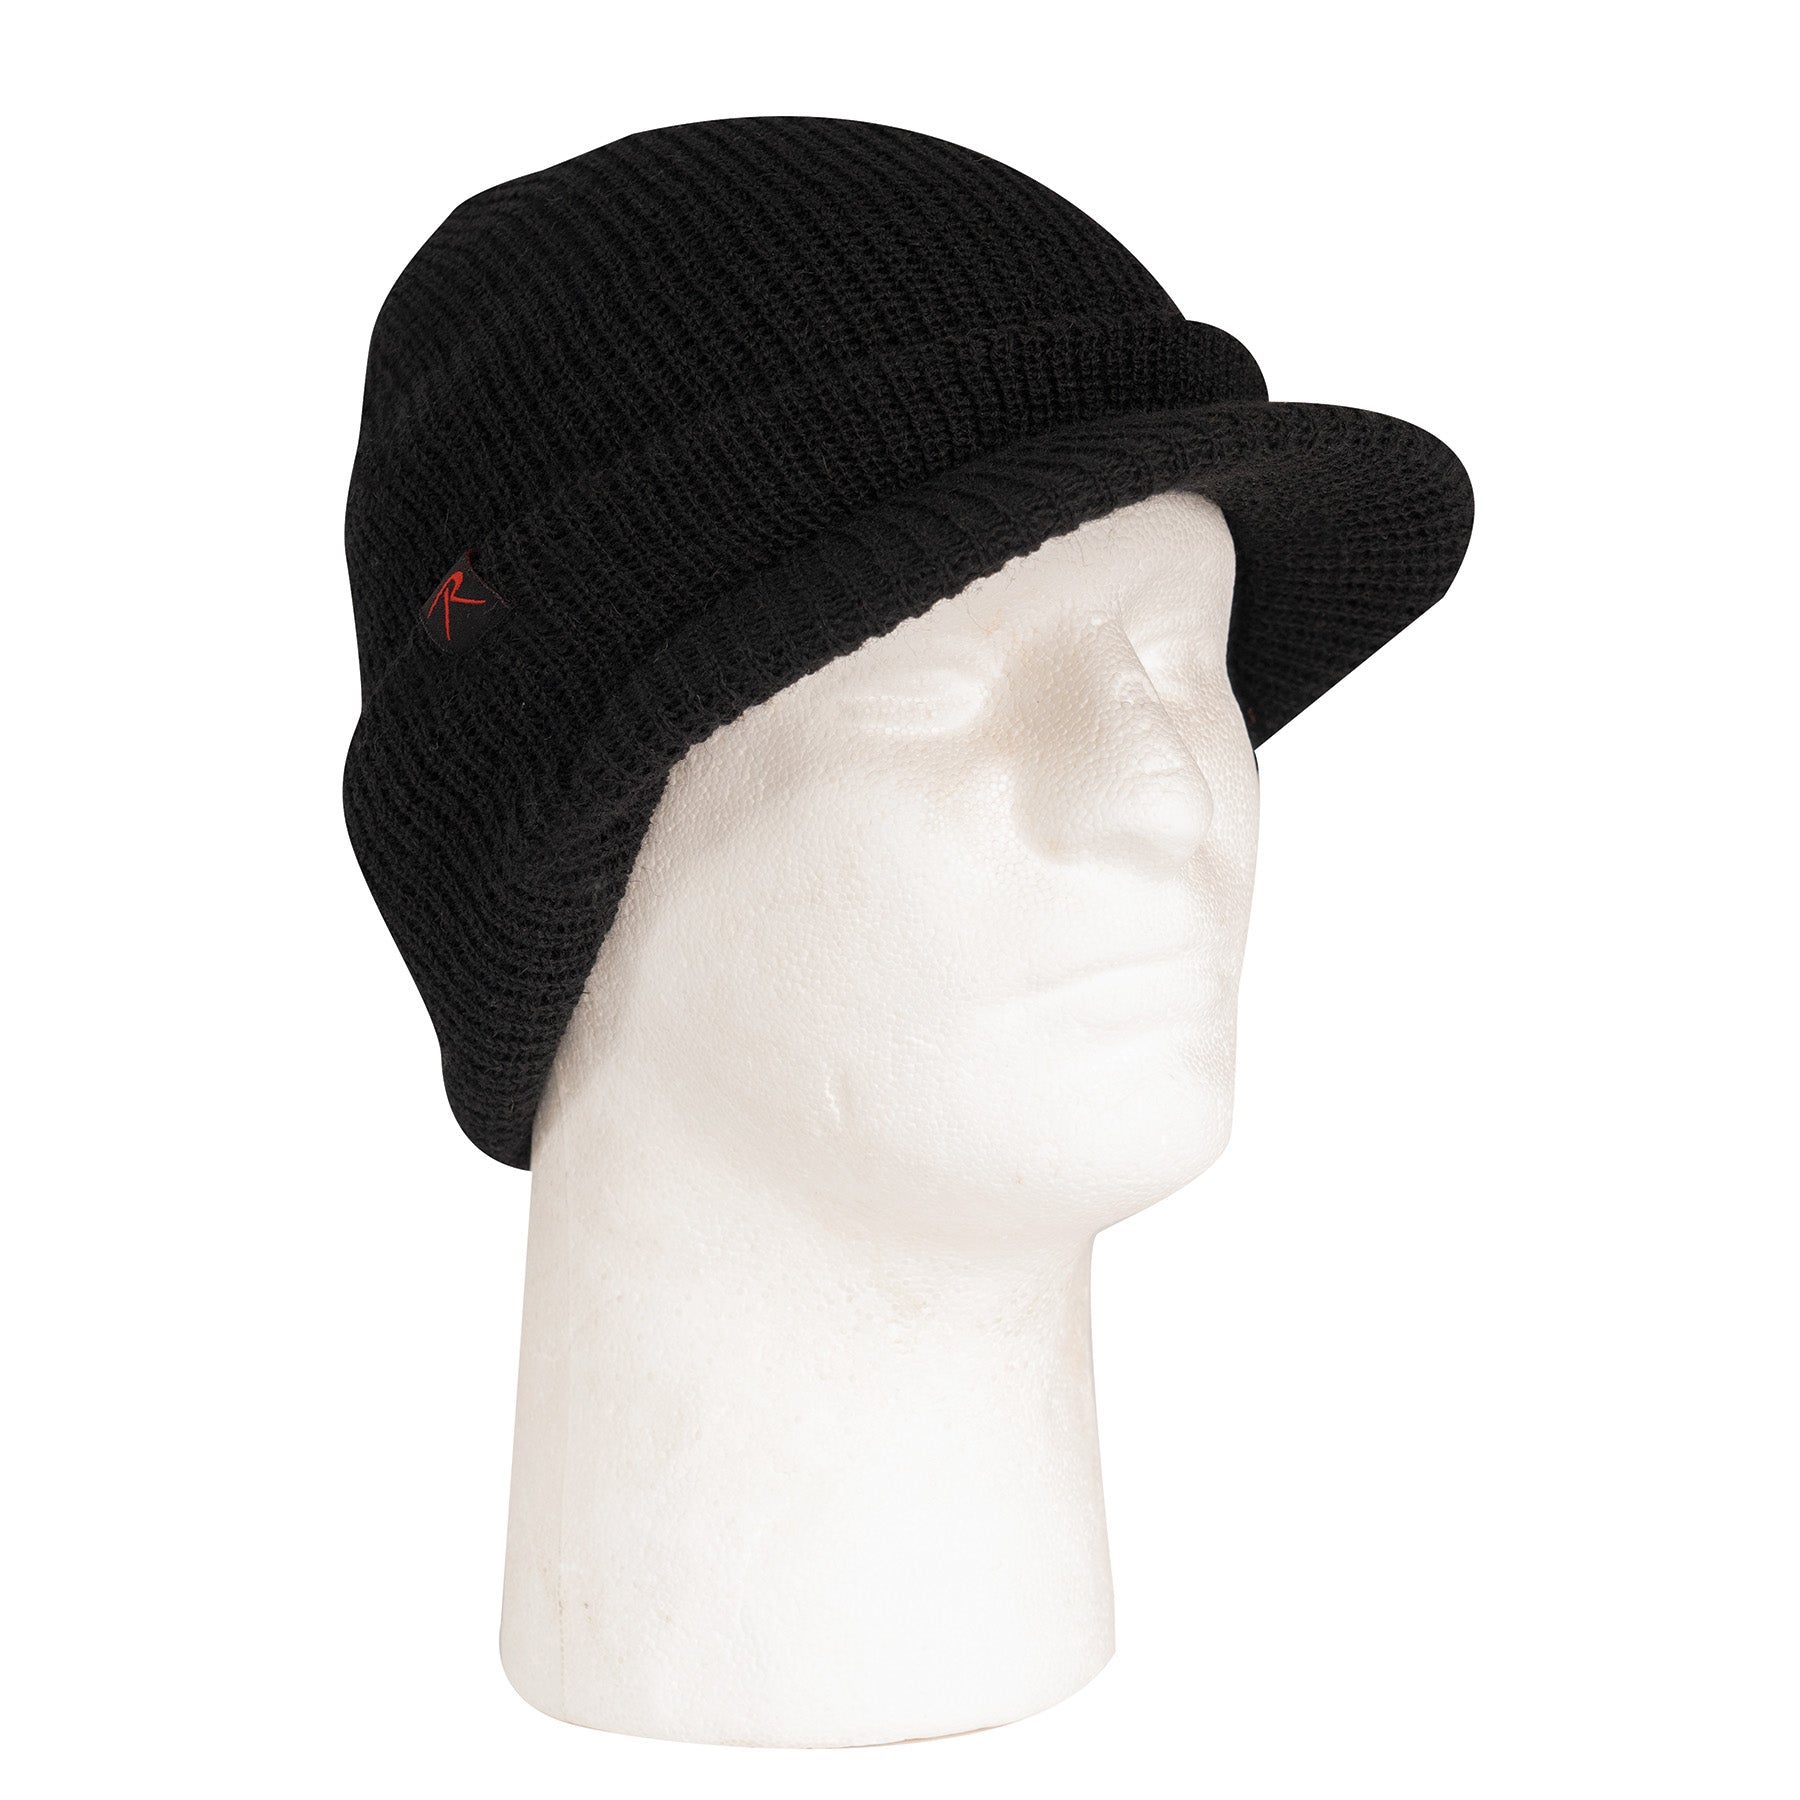 Camo Hats for Men&Women w/Cooling Neck Gaiter Baseball Caps